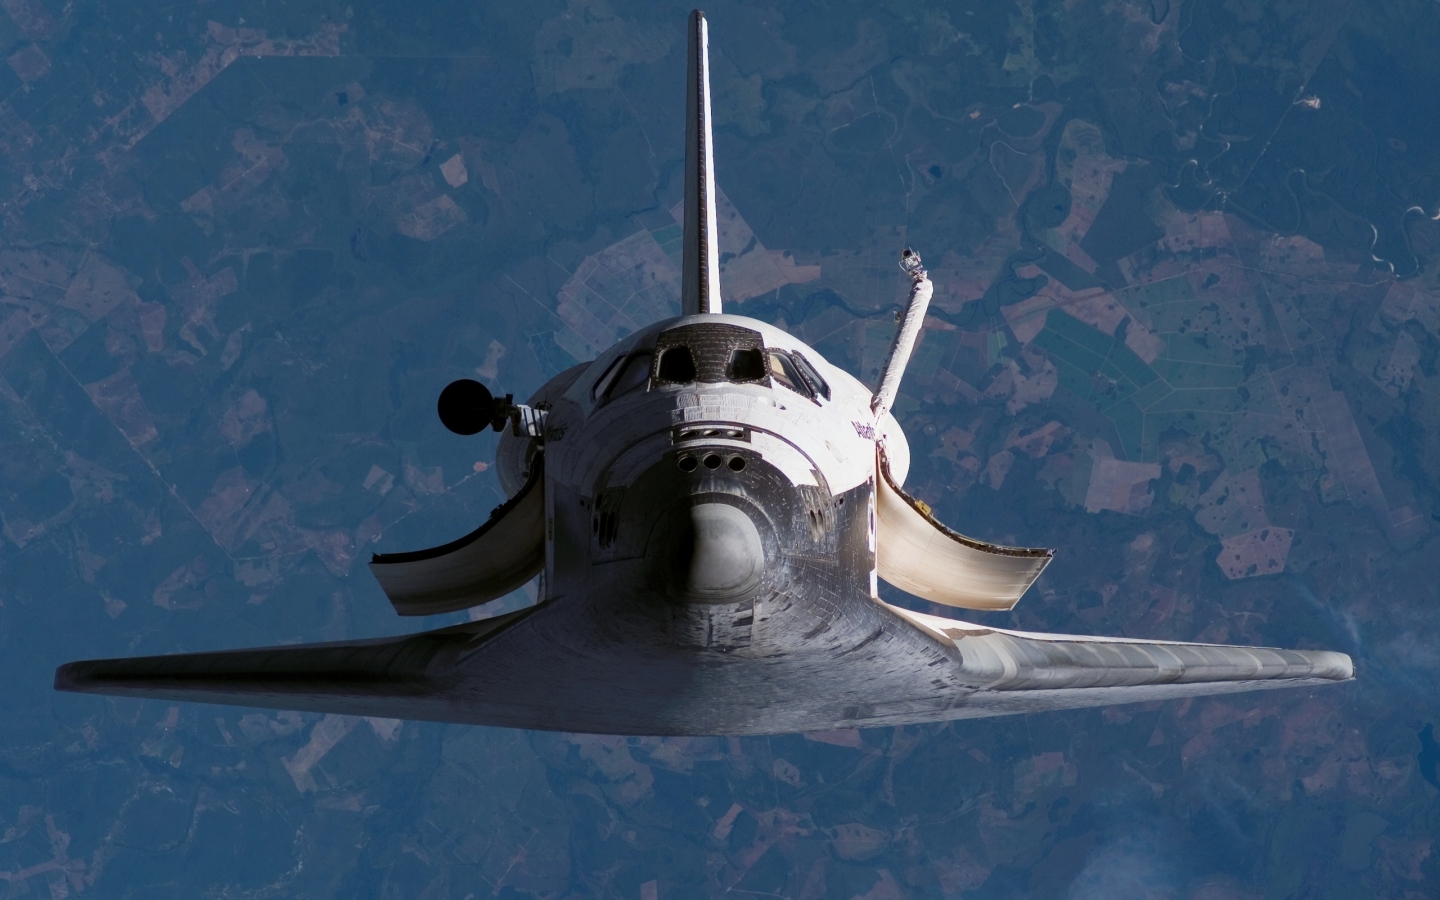 Space shuttle orbit for 1440 x 900 widescreen resolution